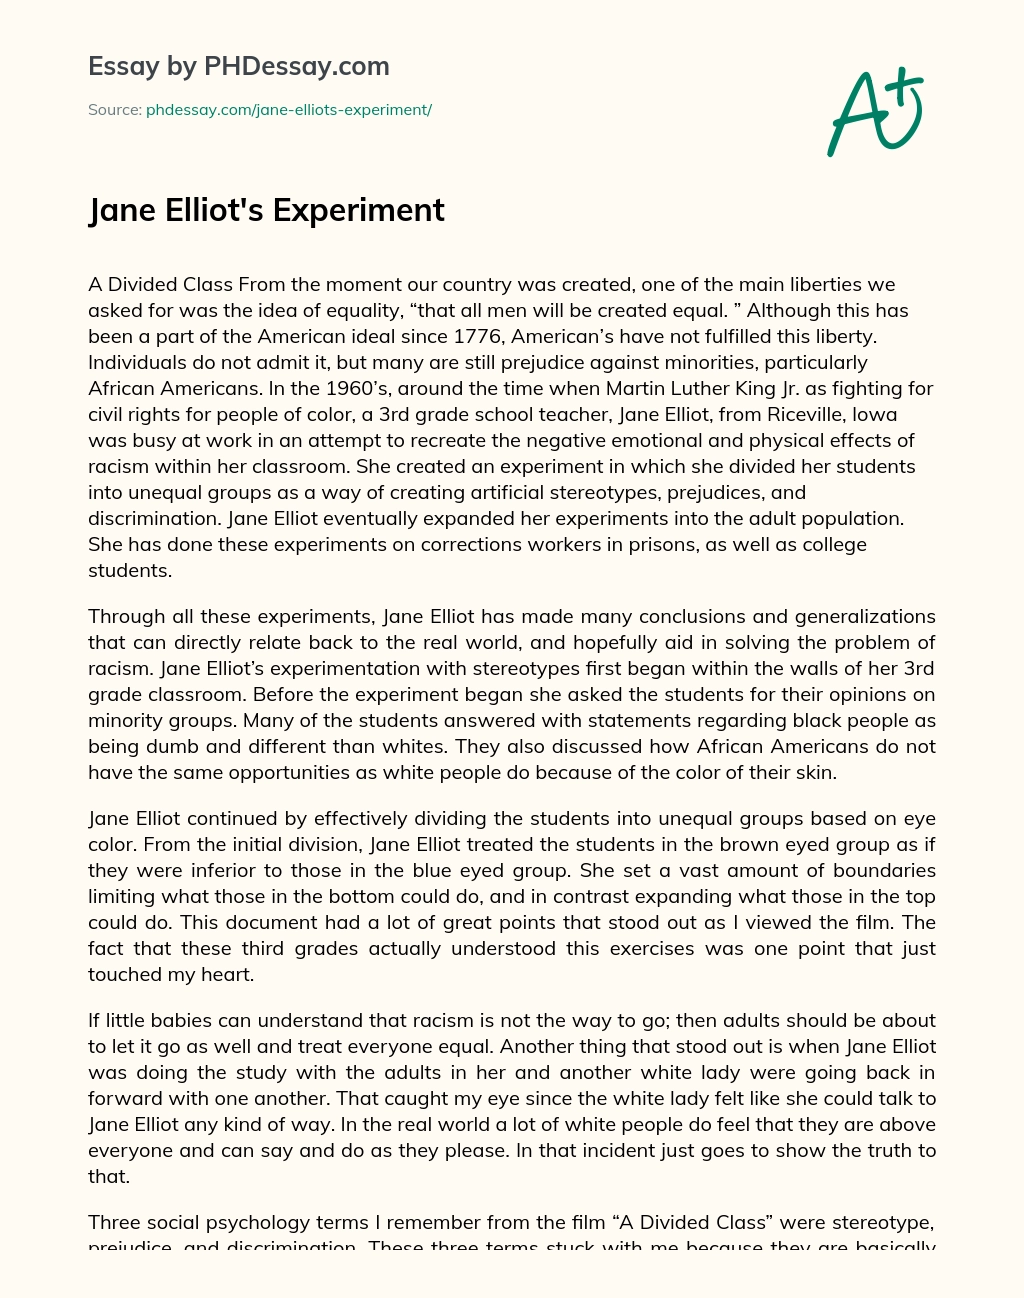 Jane Elliot’s Experiment essay